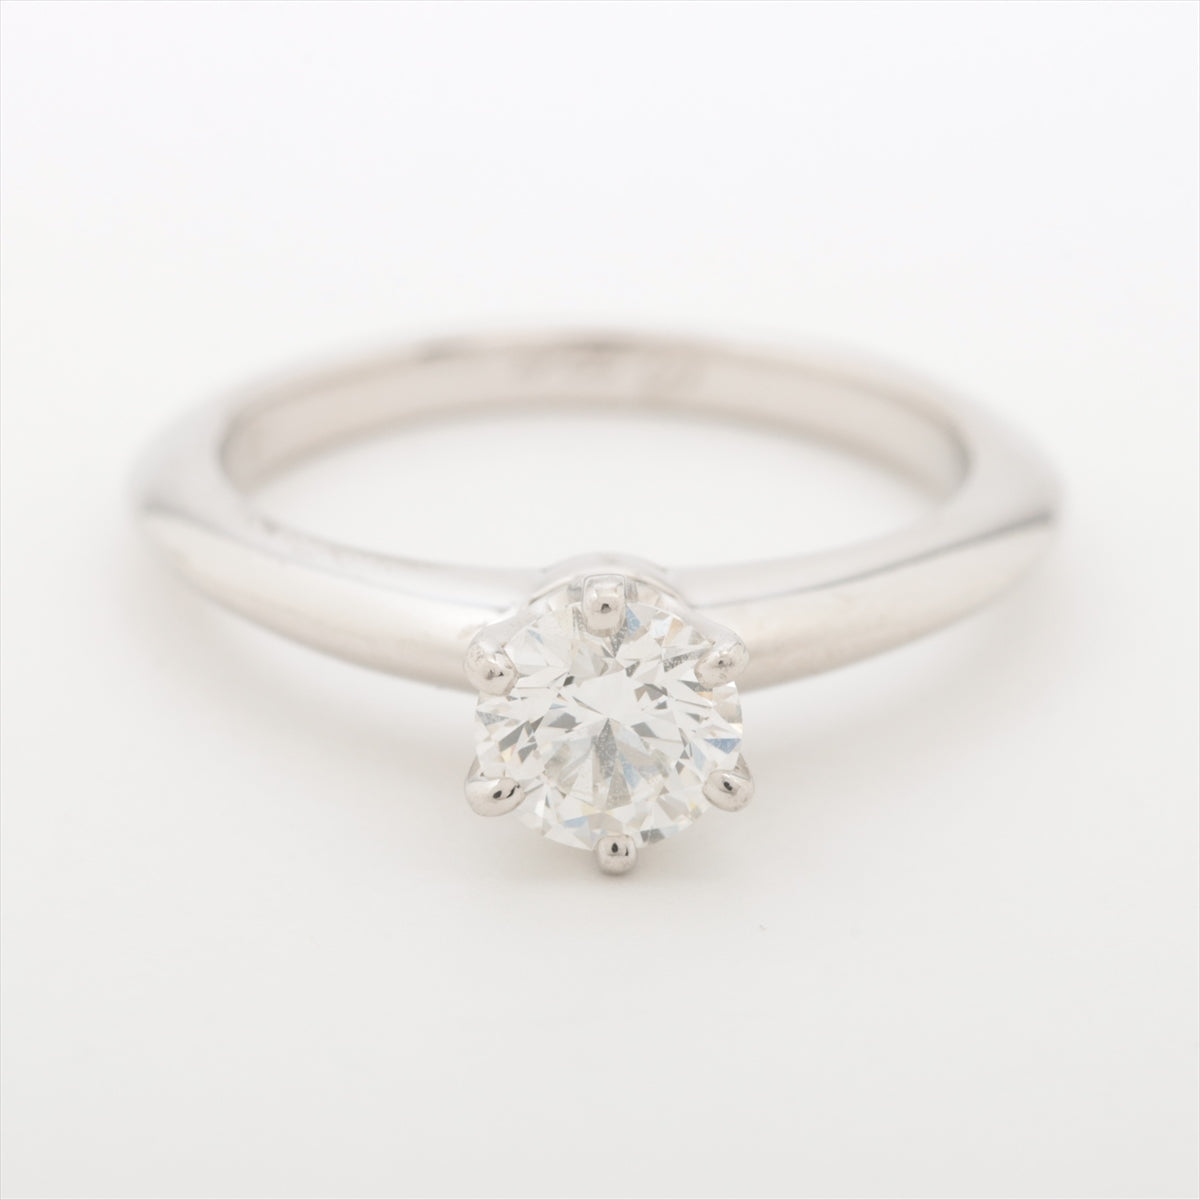 Tiffany Solitaire diamond rings Pt950 3.6g 0.42 I VS1 3EX NONE